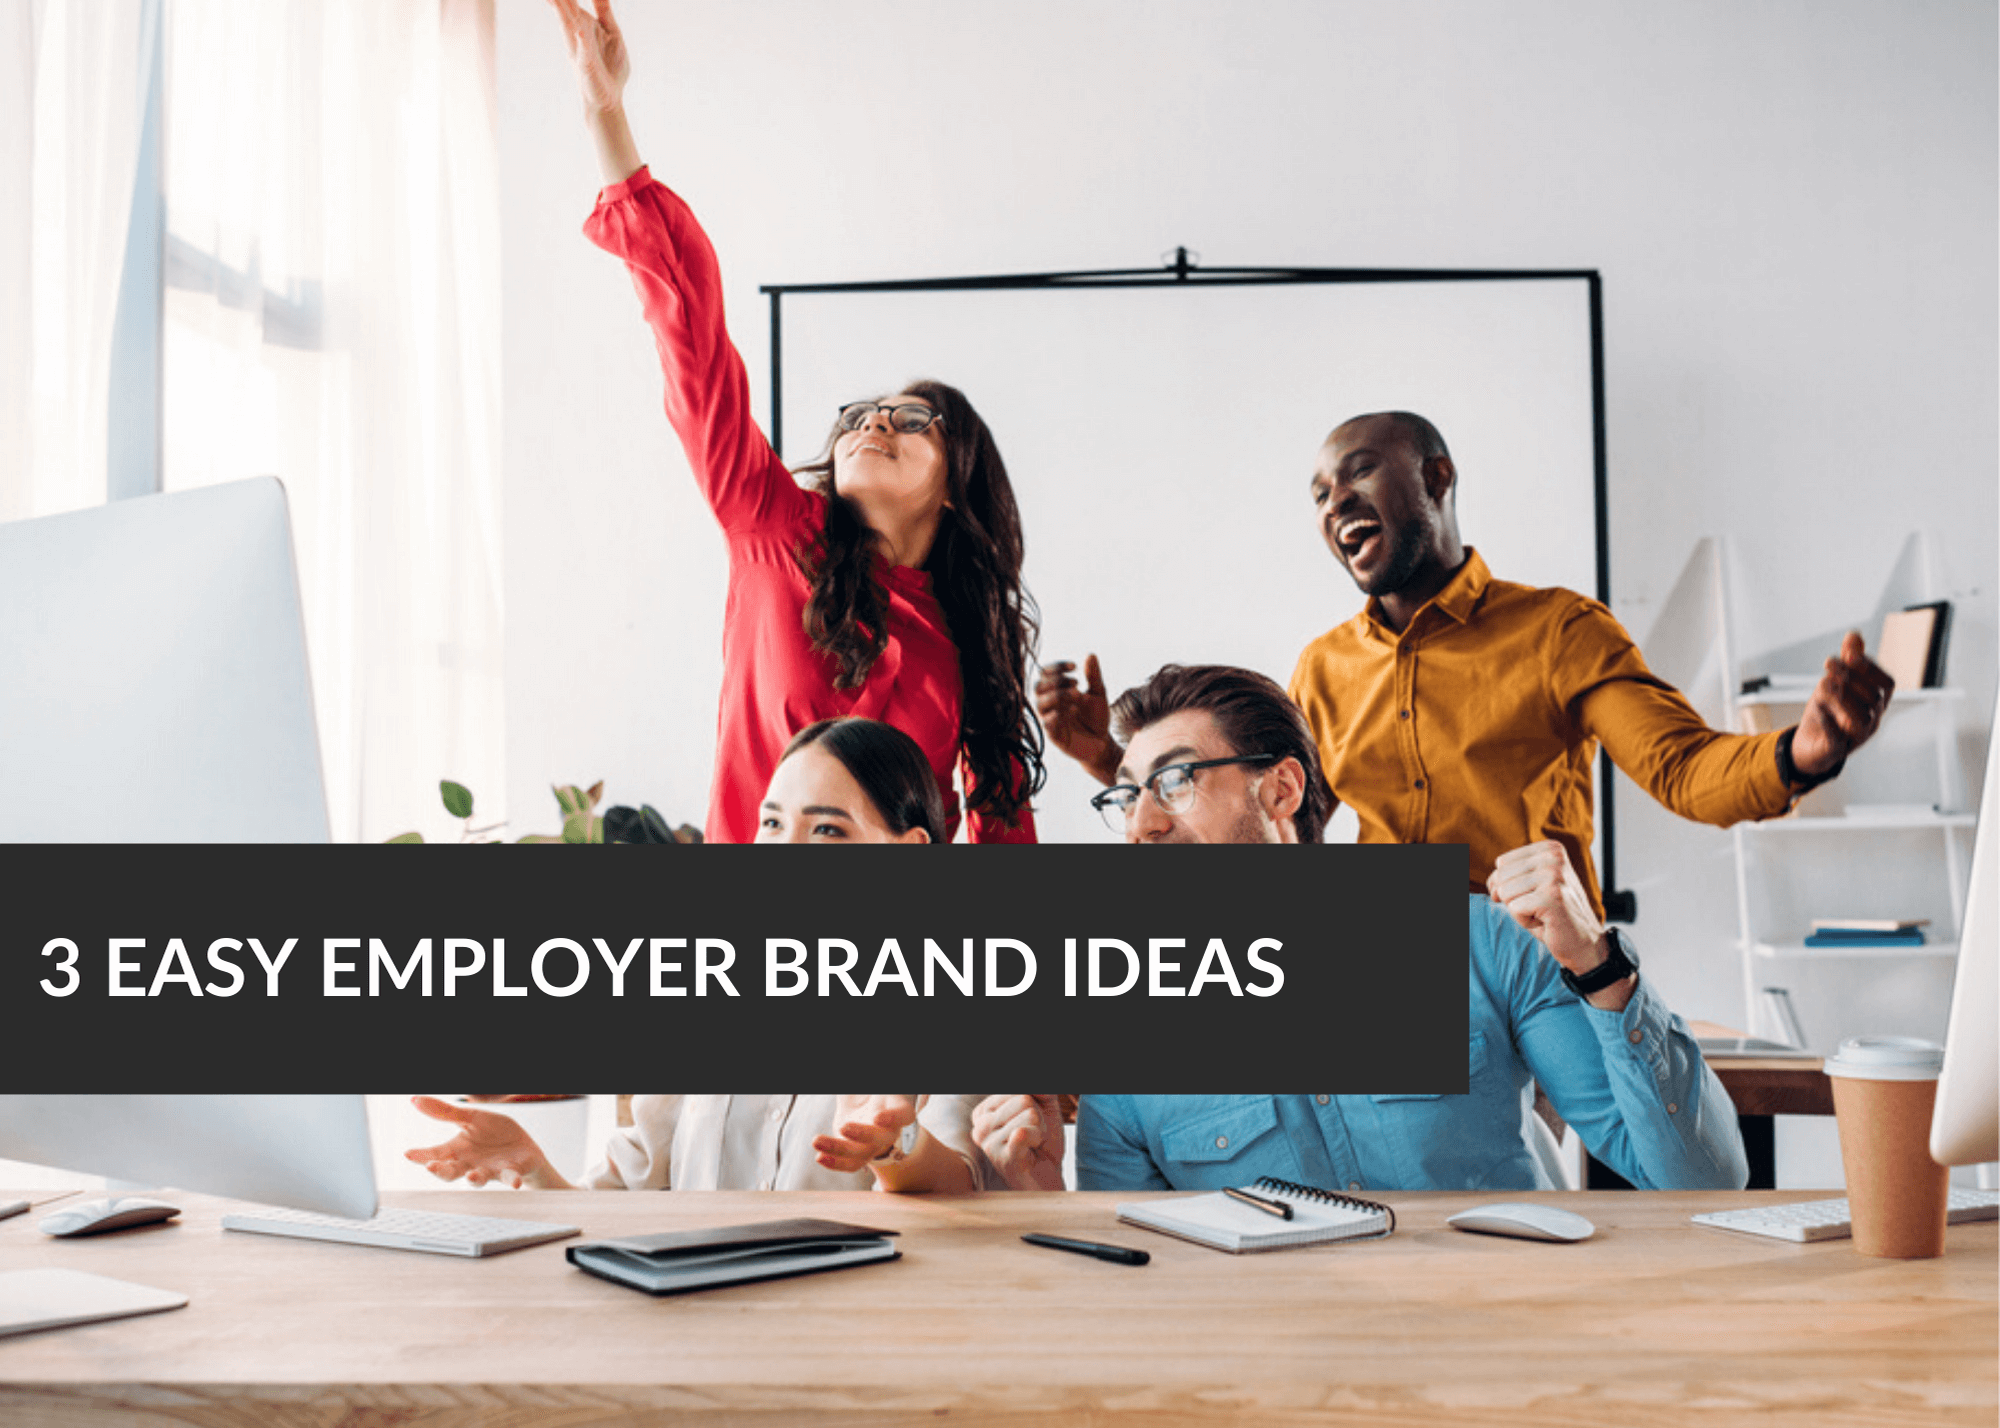 3 Easy Employer Brand Ideas